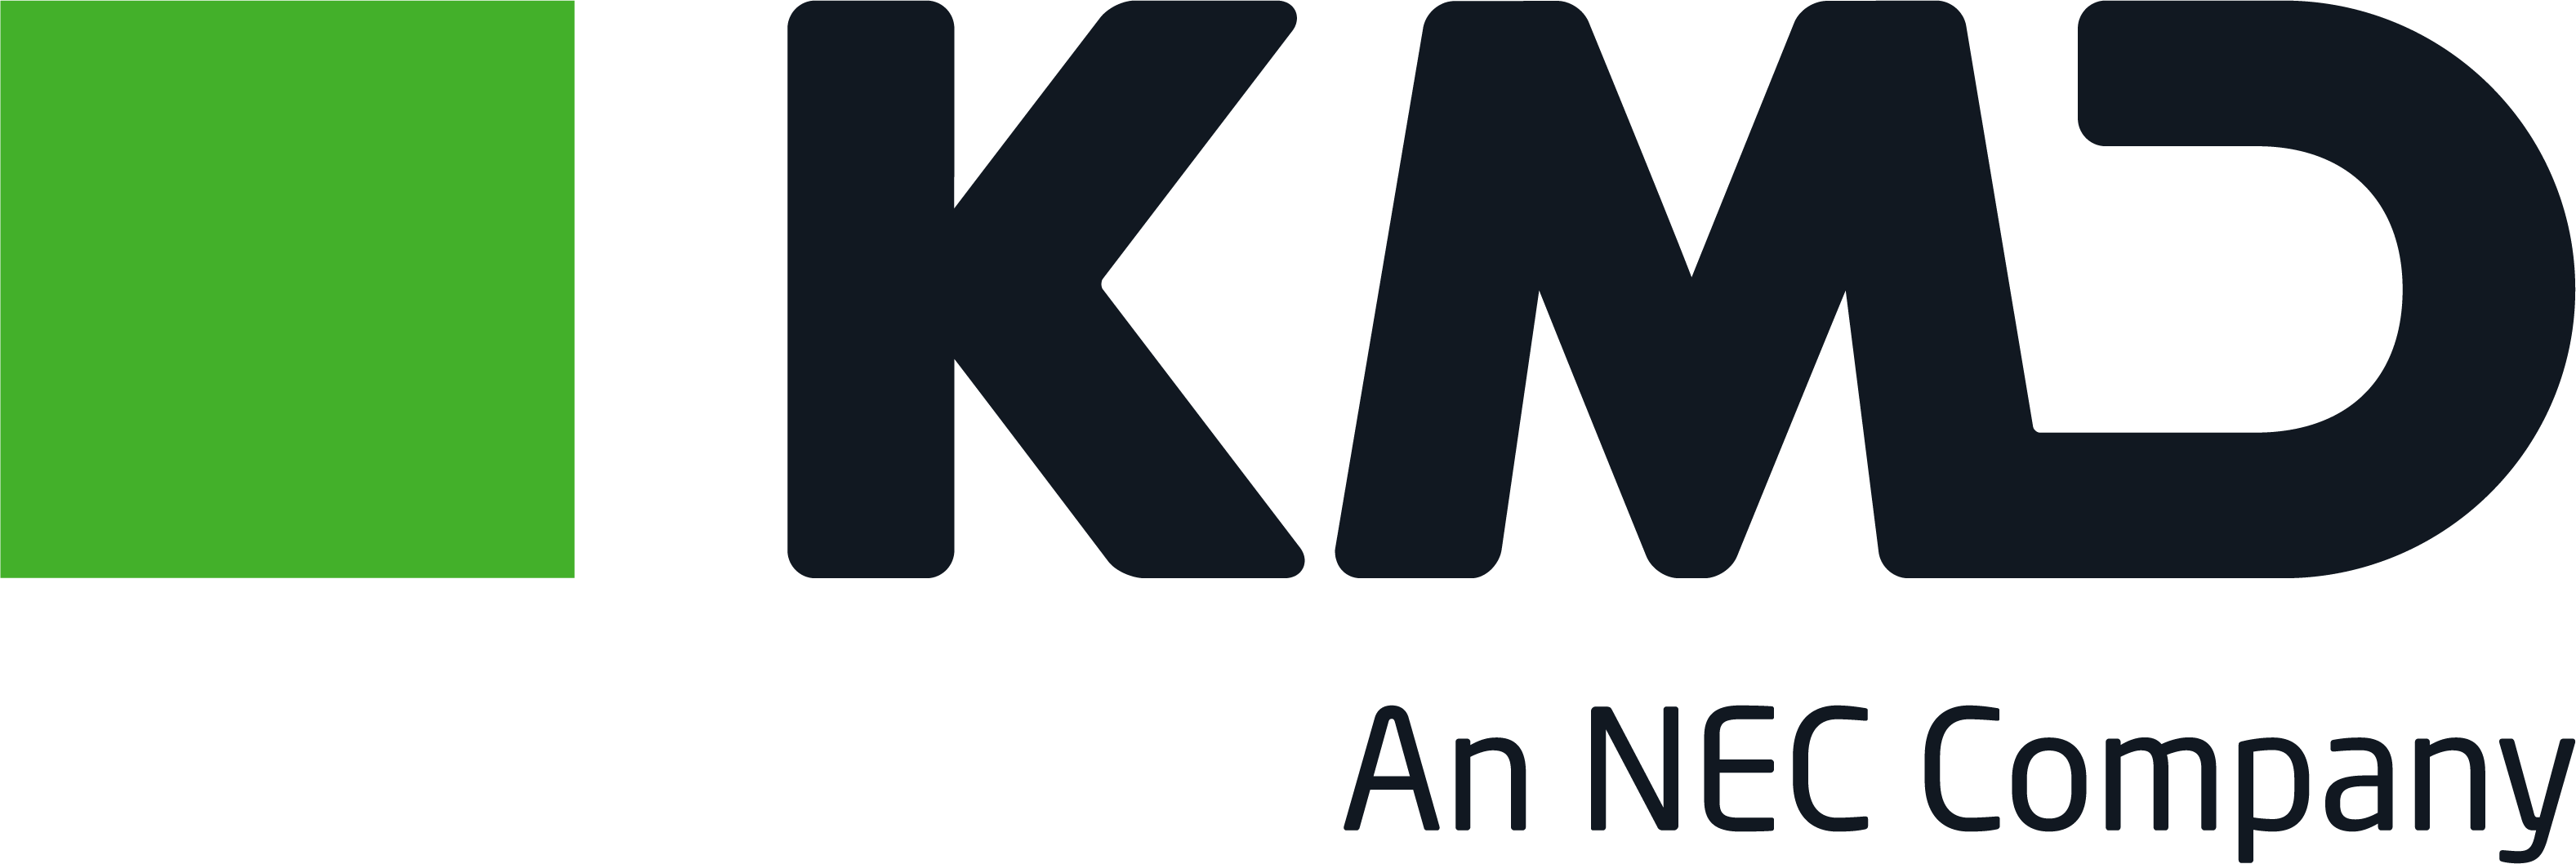 KMD Group